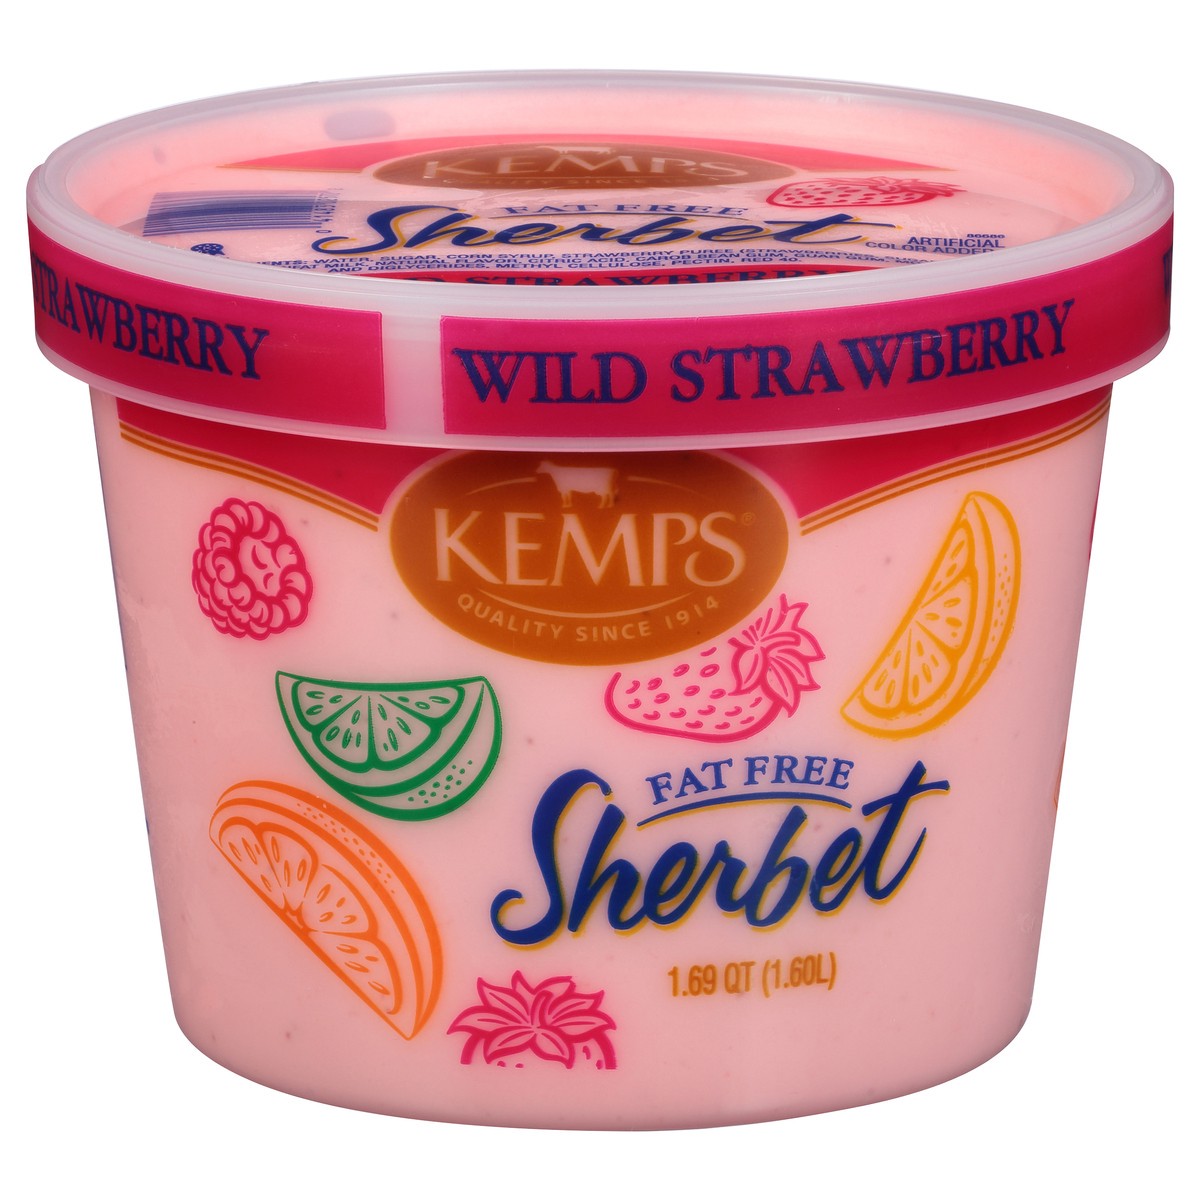 slide 1 of 11, Kemps Fat Free Wild Strawberry Sherbet, 1.69 qt